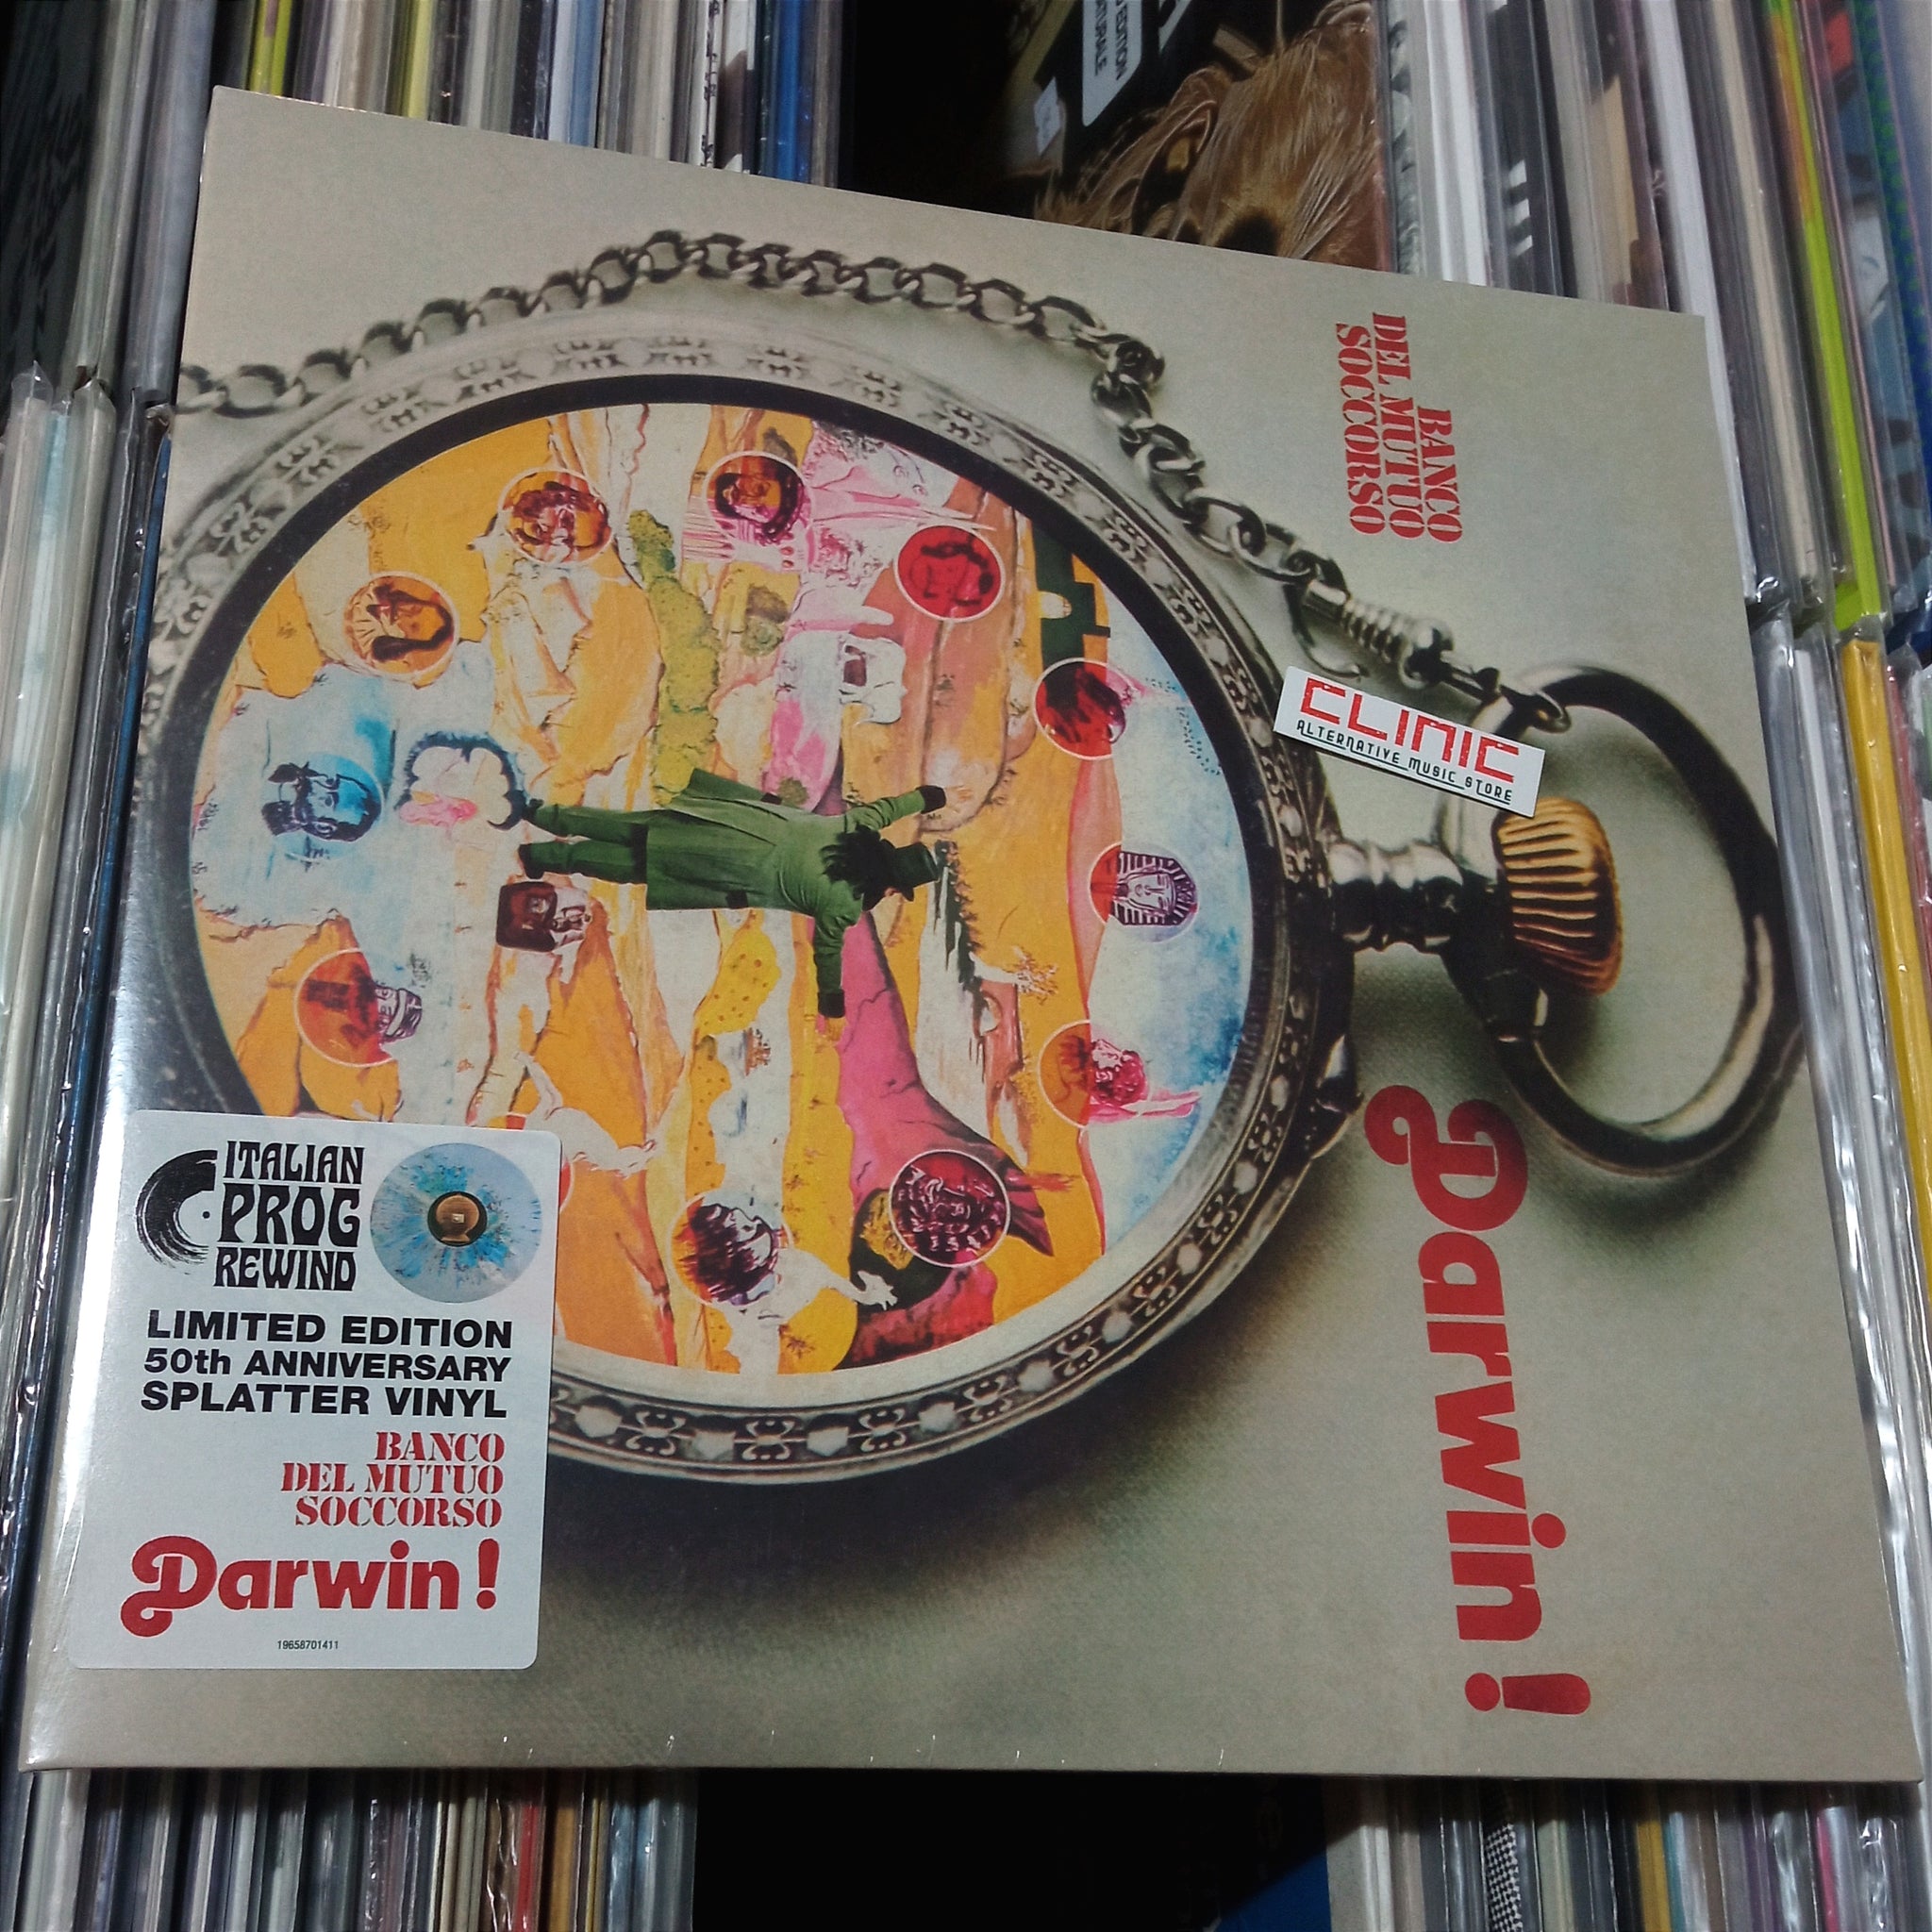 LP - BANCO DEL MUTUO SOCCORSO - DARWIN (Limited Edition)